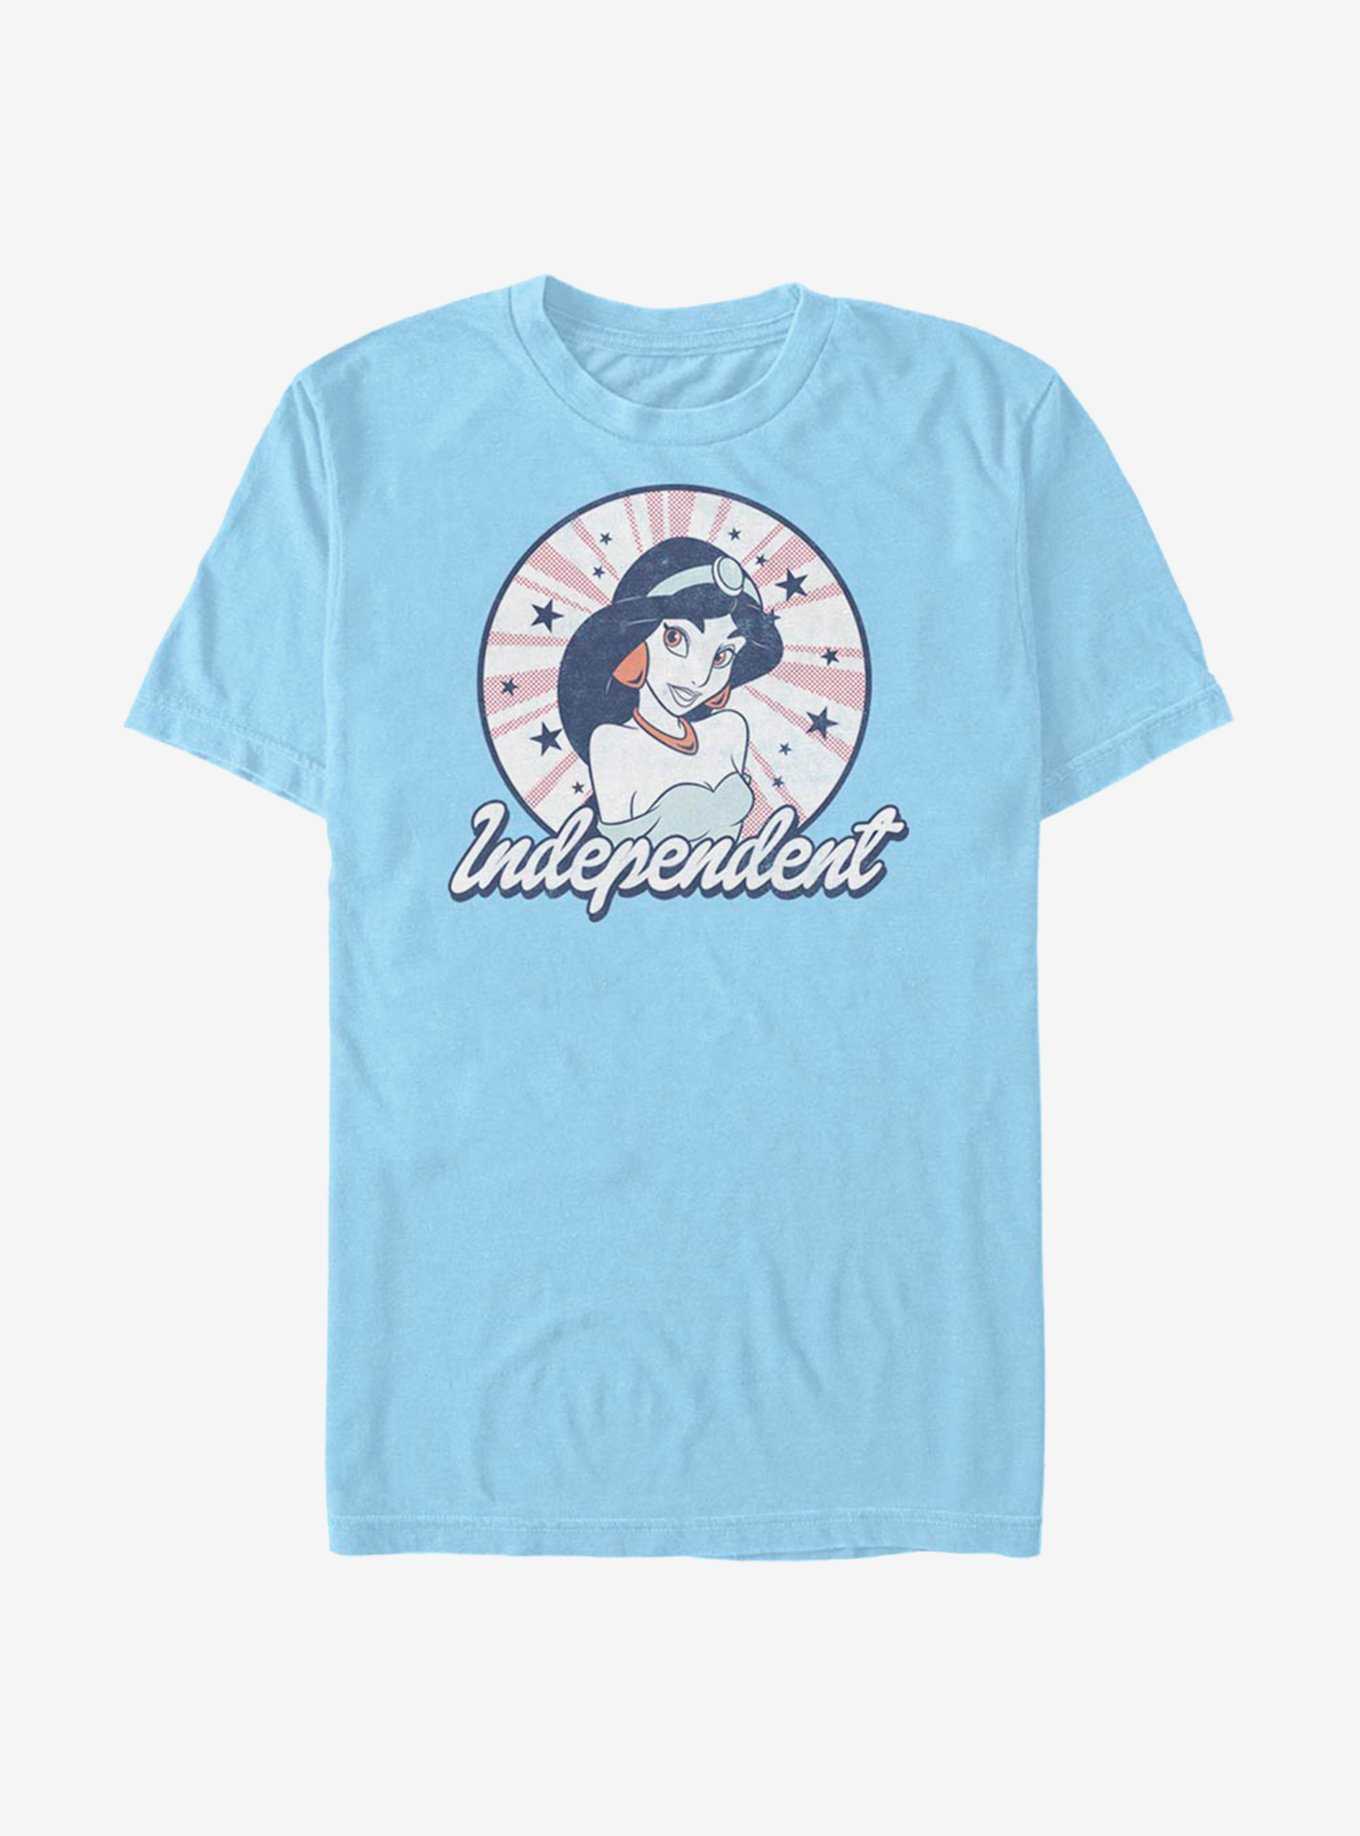 Disney Aladdin Jasmine Independent T-Shirt, , hi-res